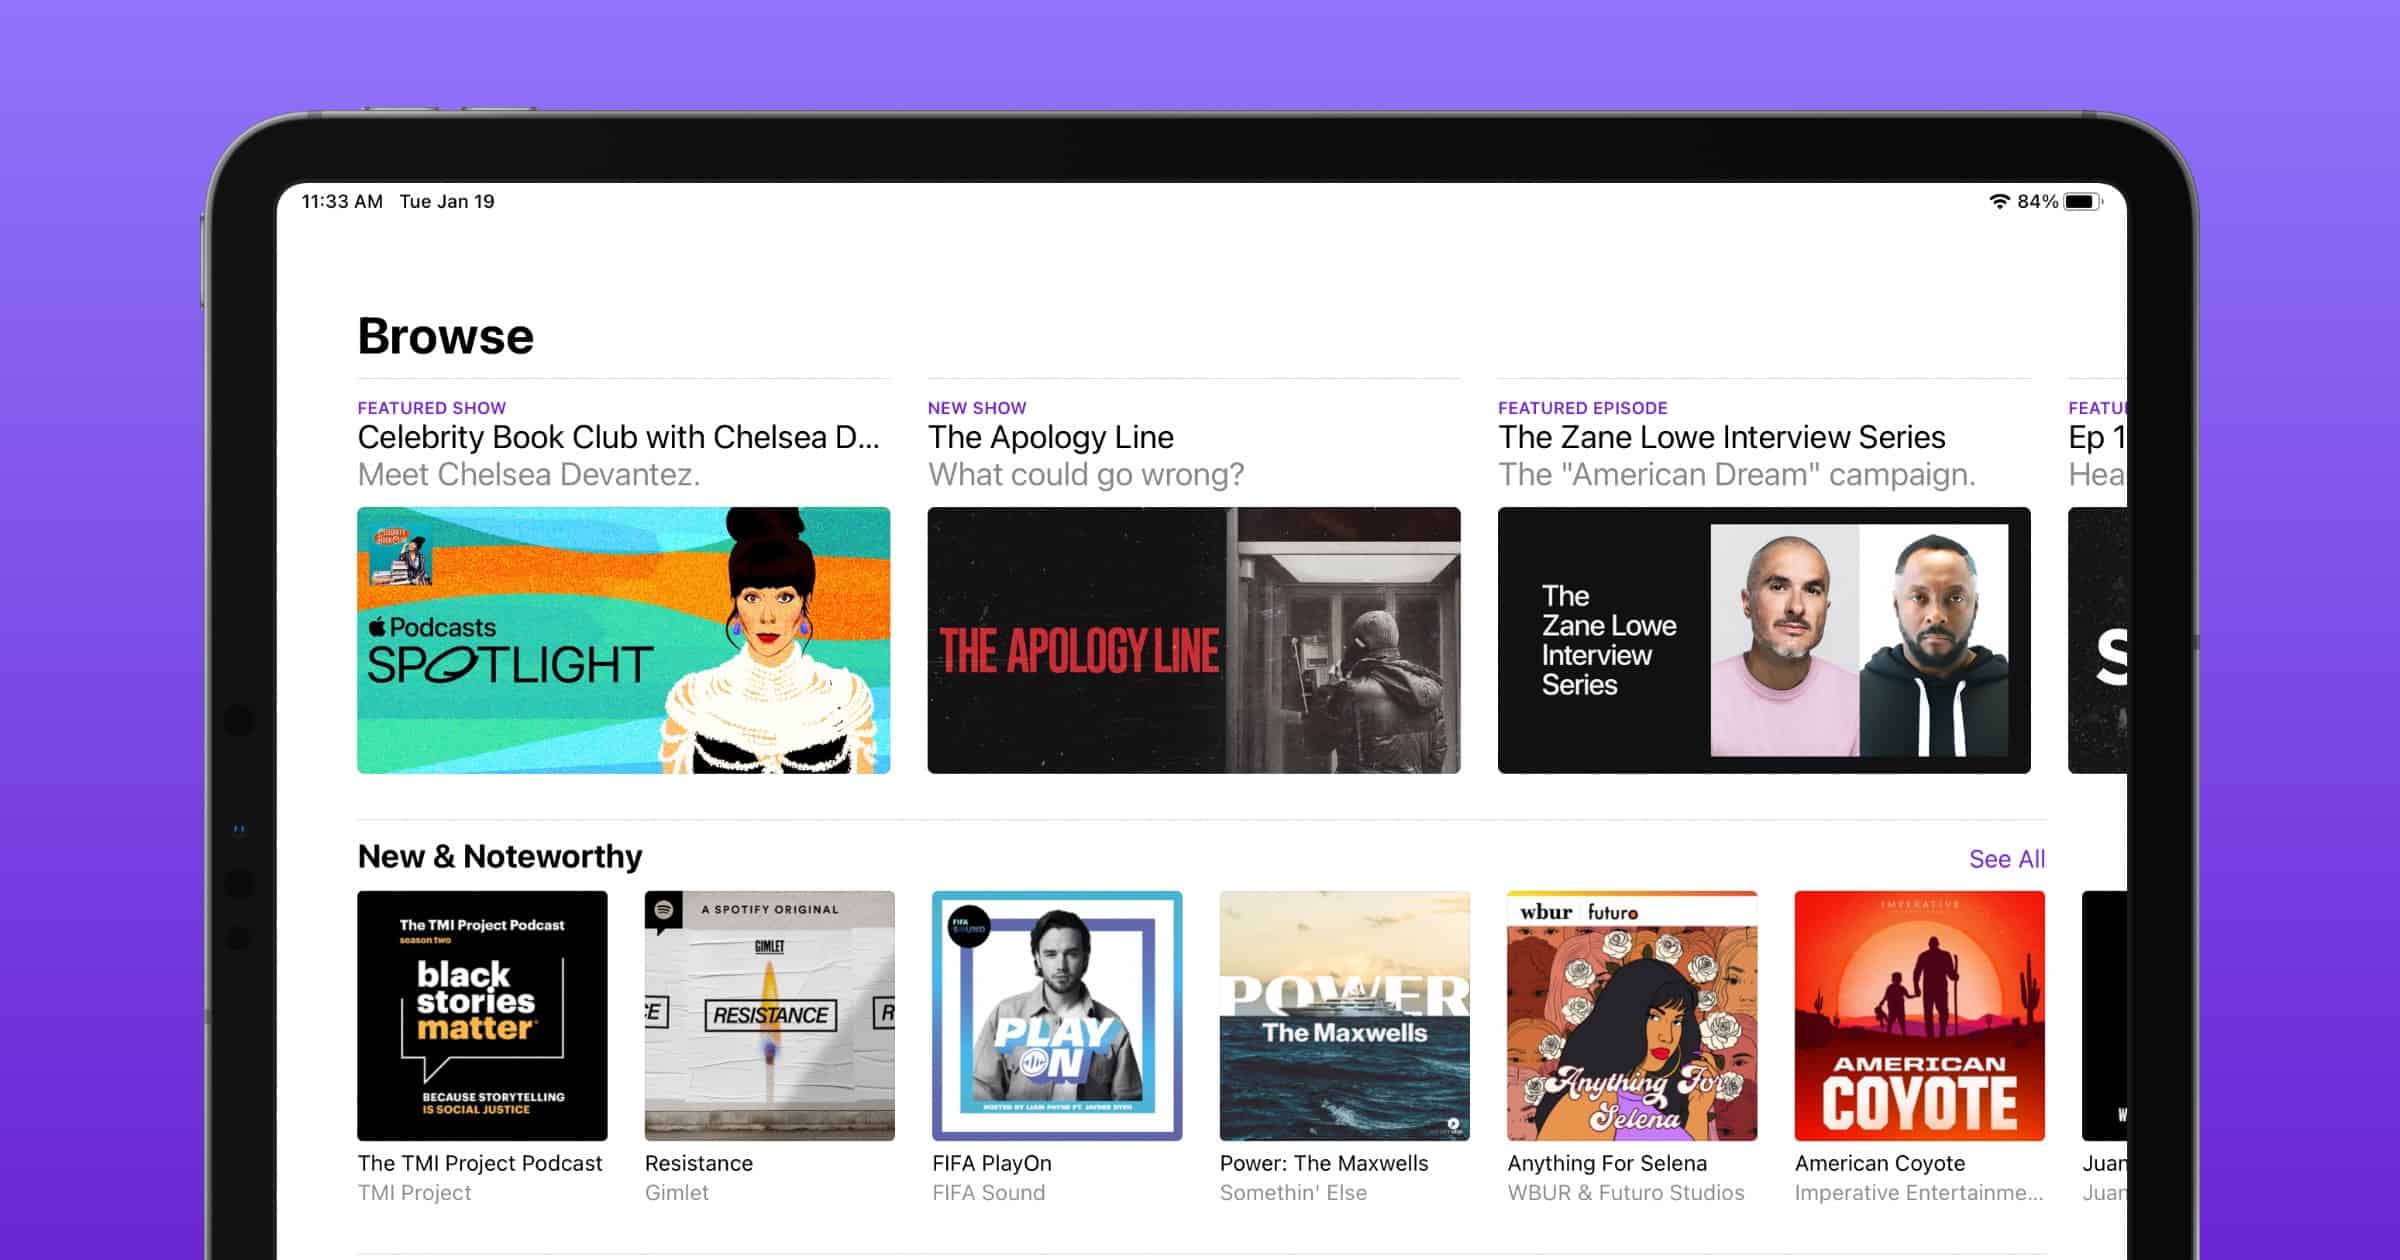 Apple podcasts spotlight on iPad